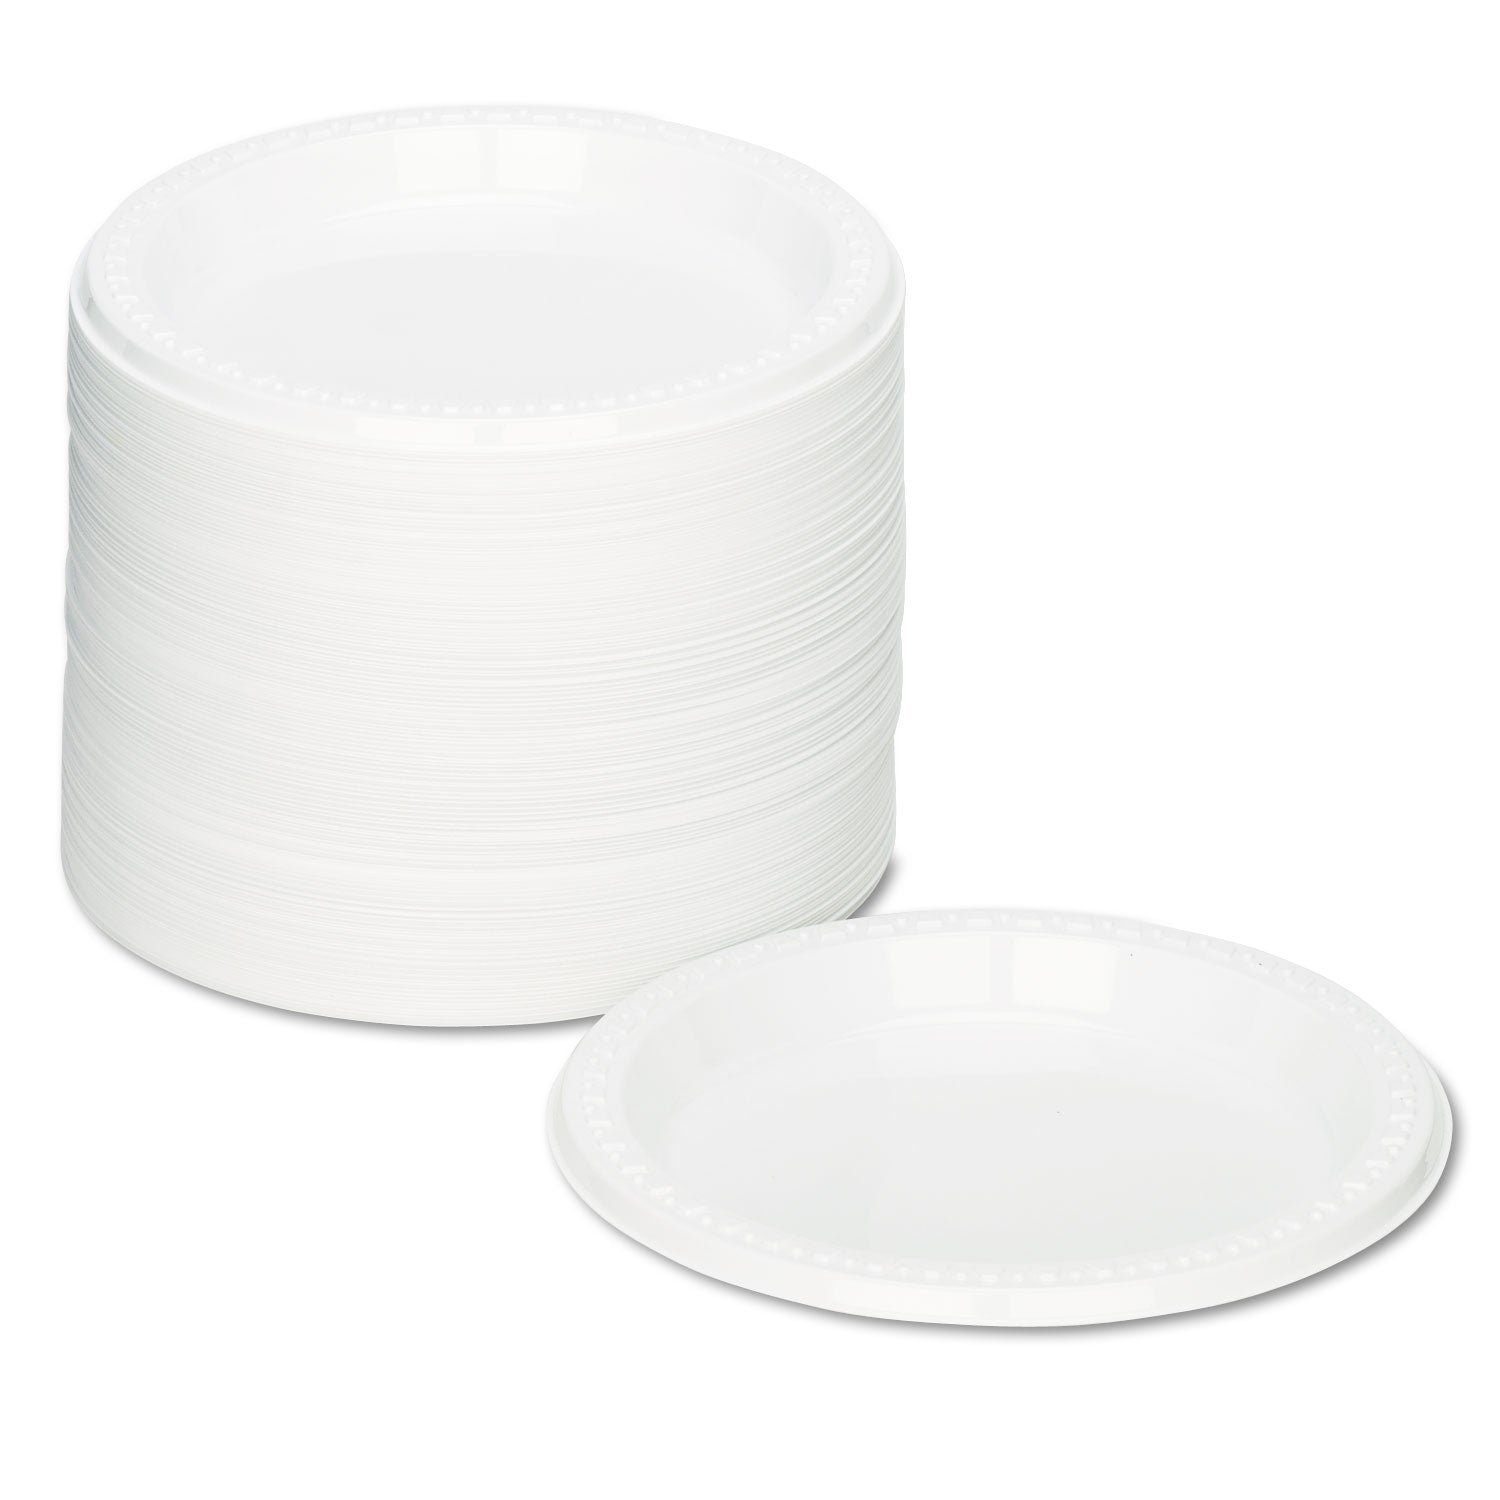 Plastic Dinnerware, Plates, 7" dia, White, 125/Pack - 